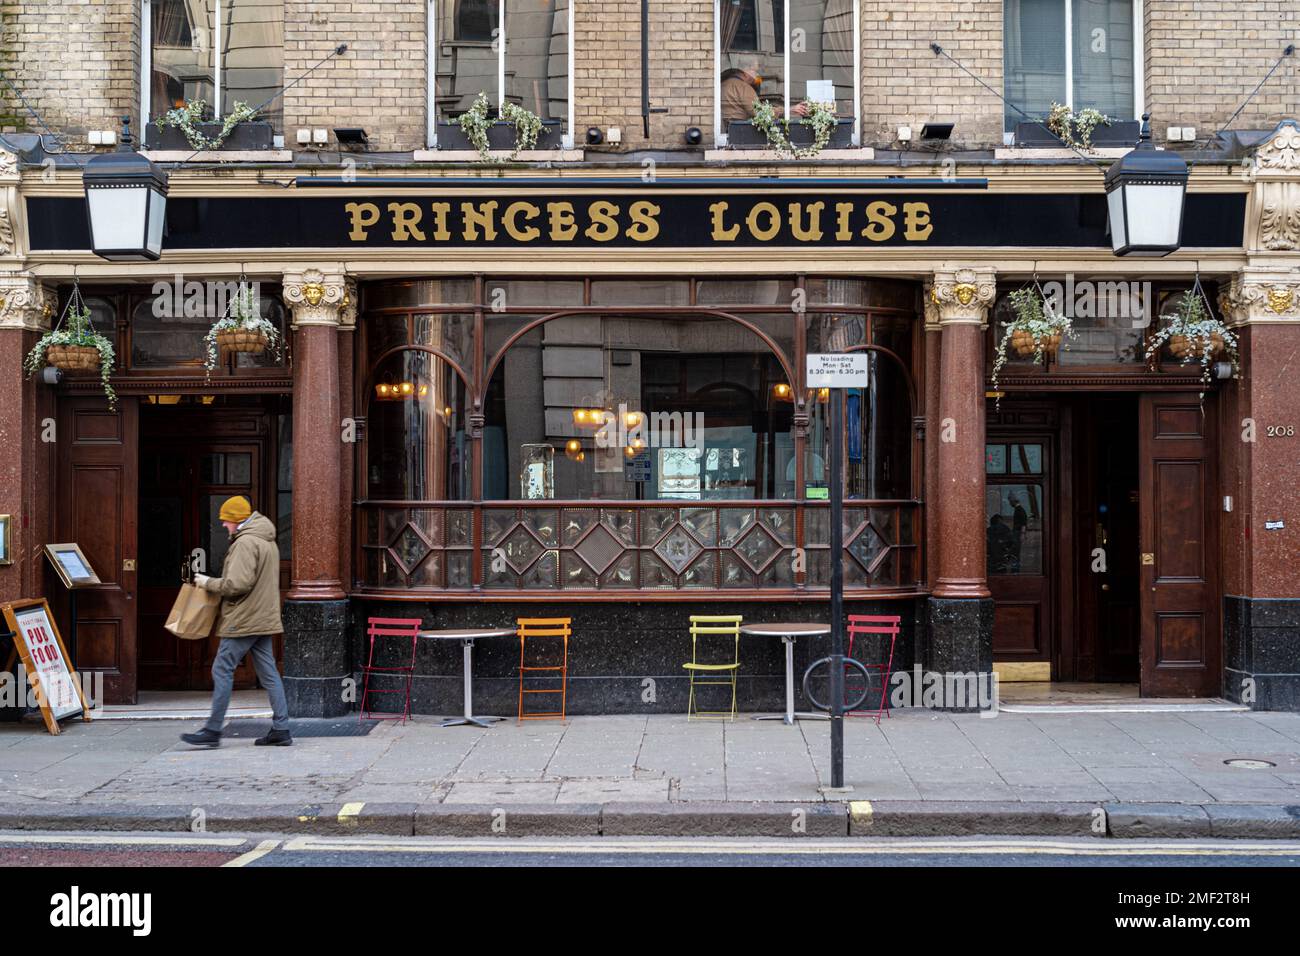 Princess Louise Pub Holborn London - The Princess Louise Pub on High Holborn, Central London. Built 1872, Grade II* listed. Samuel Smith Pub. Stock Photo